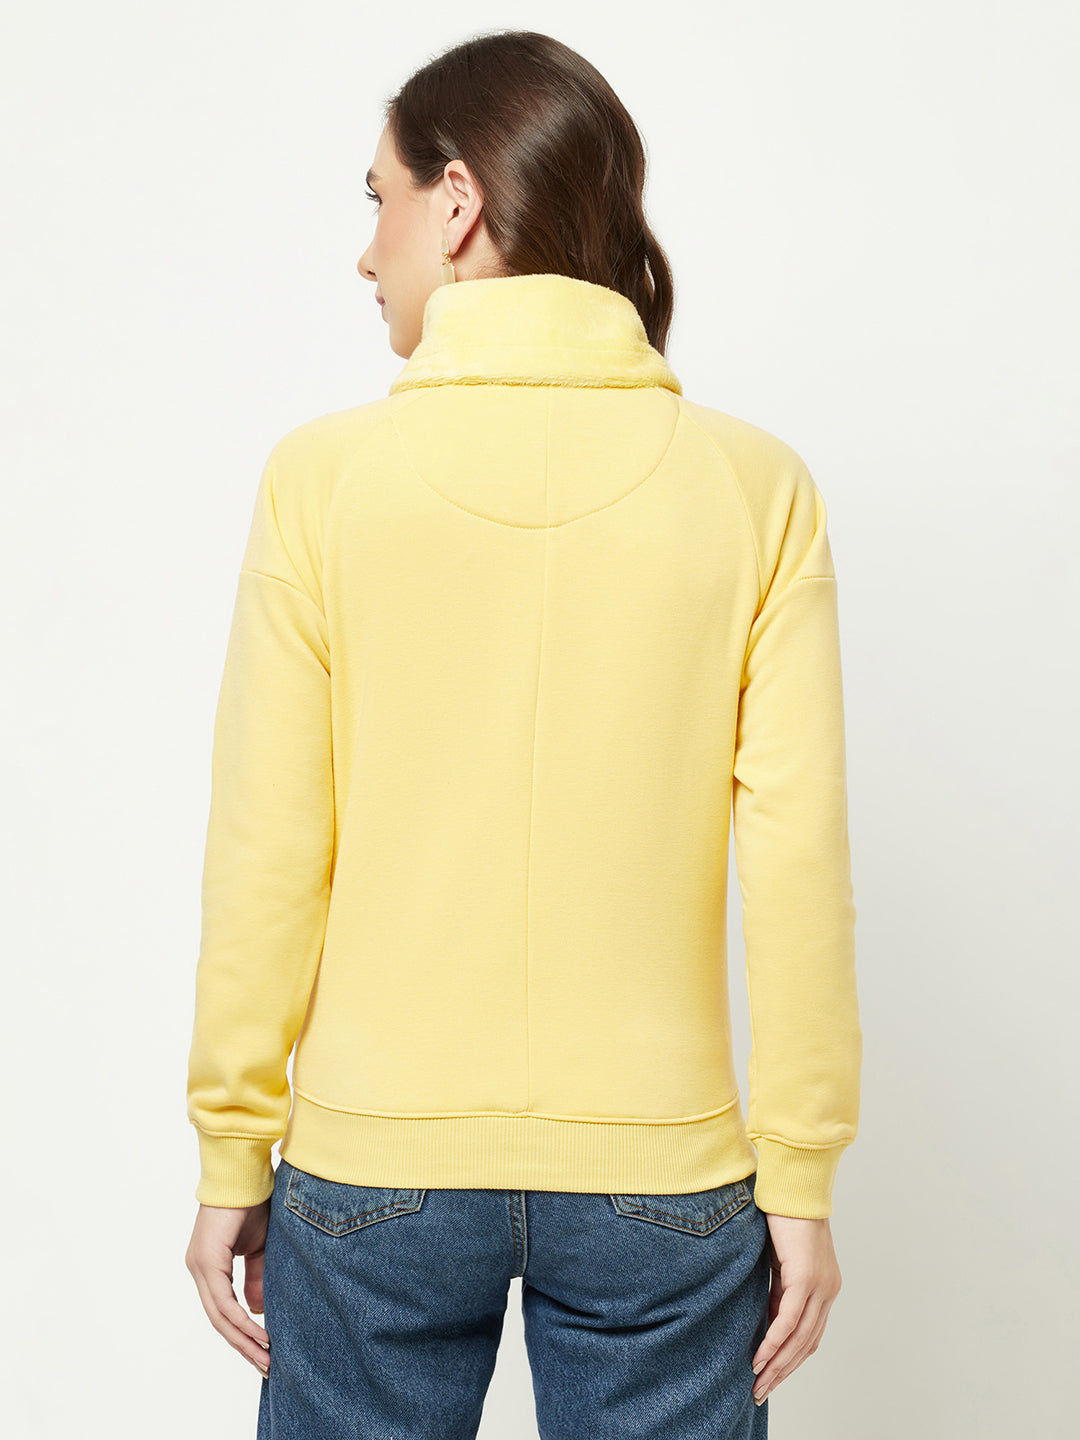  Yellow Typographic Sweatshirt 